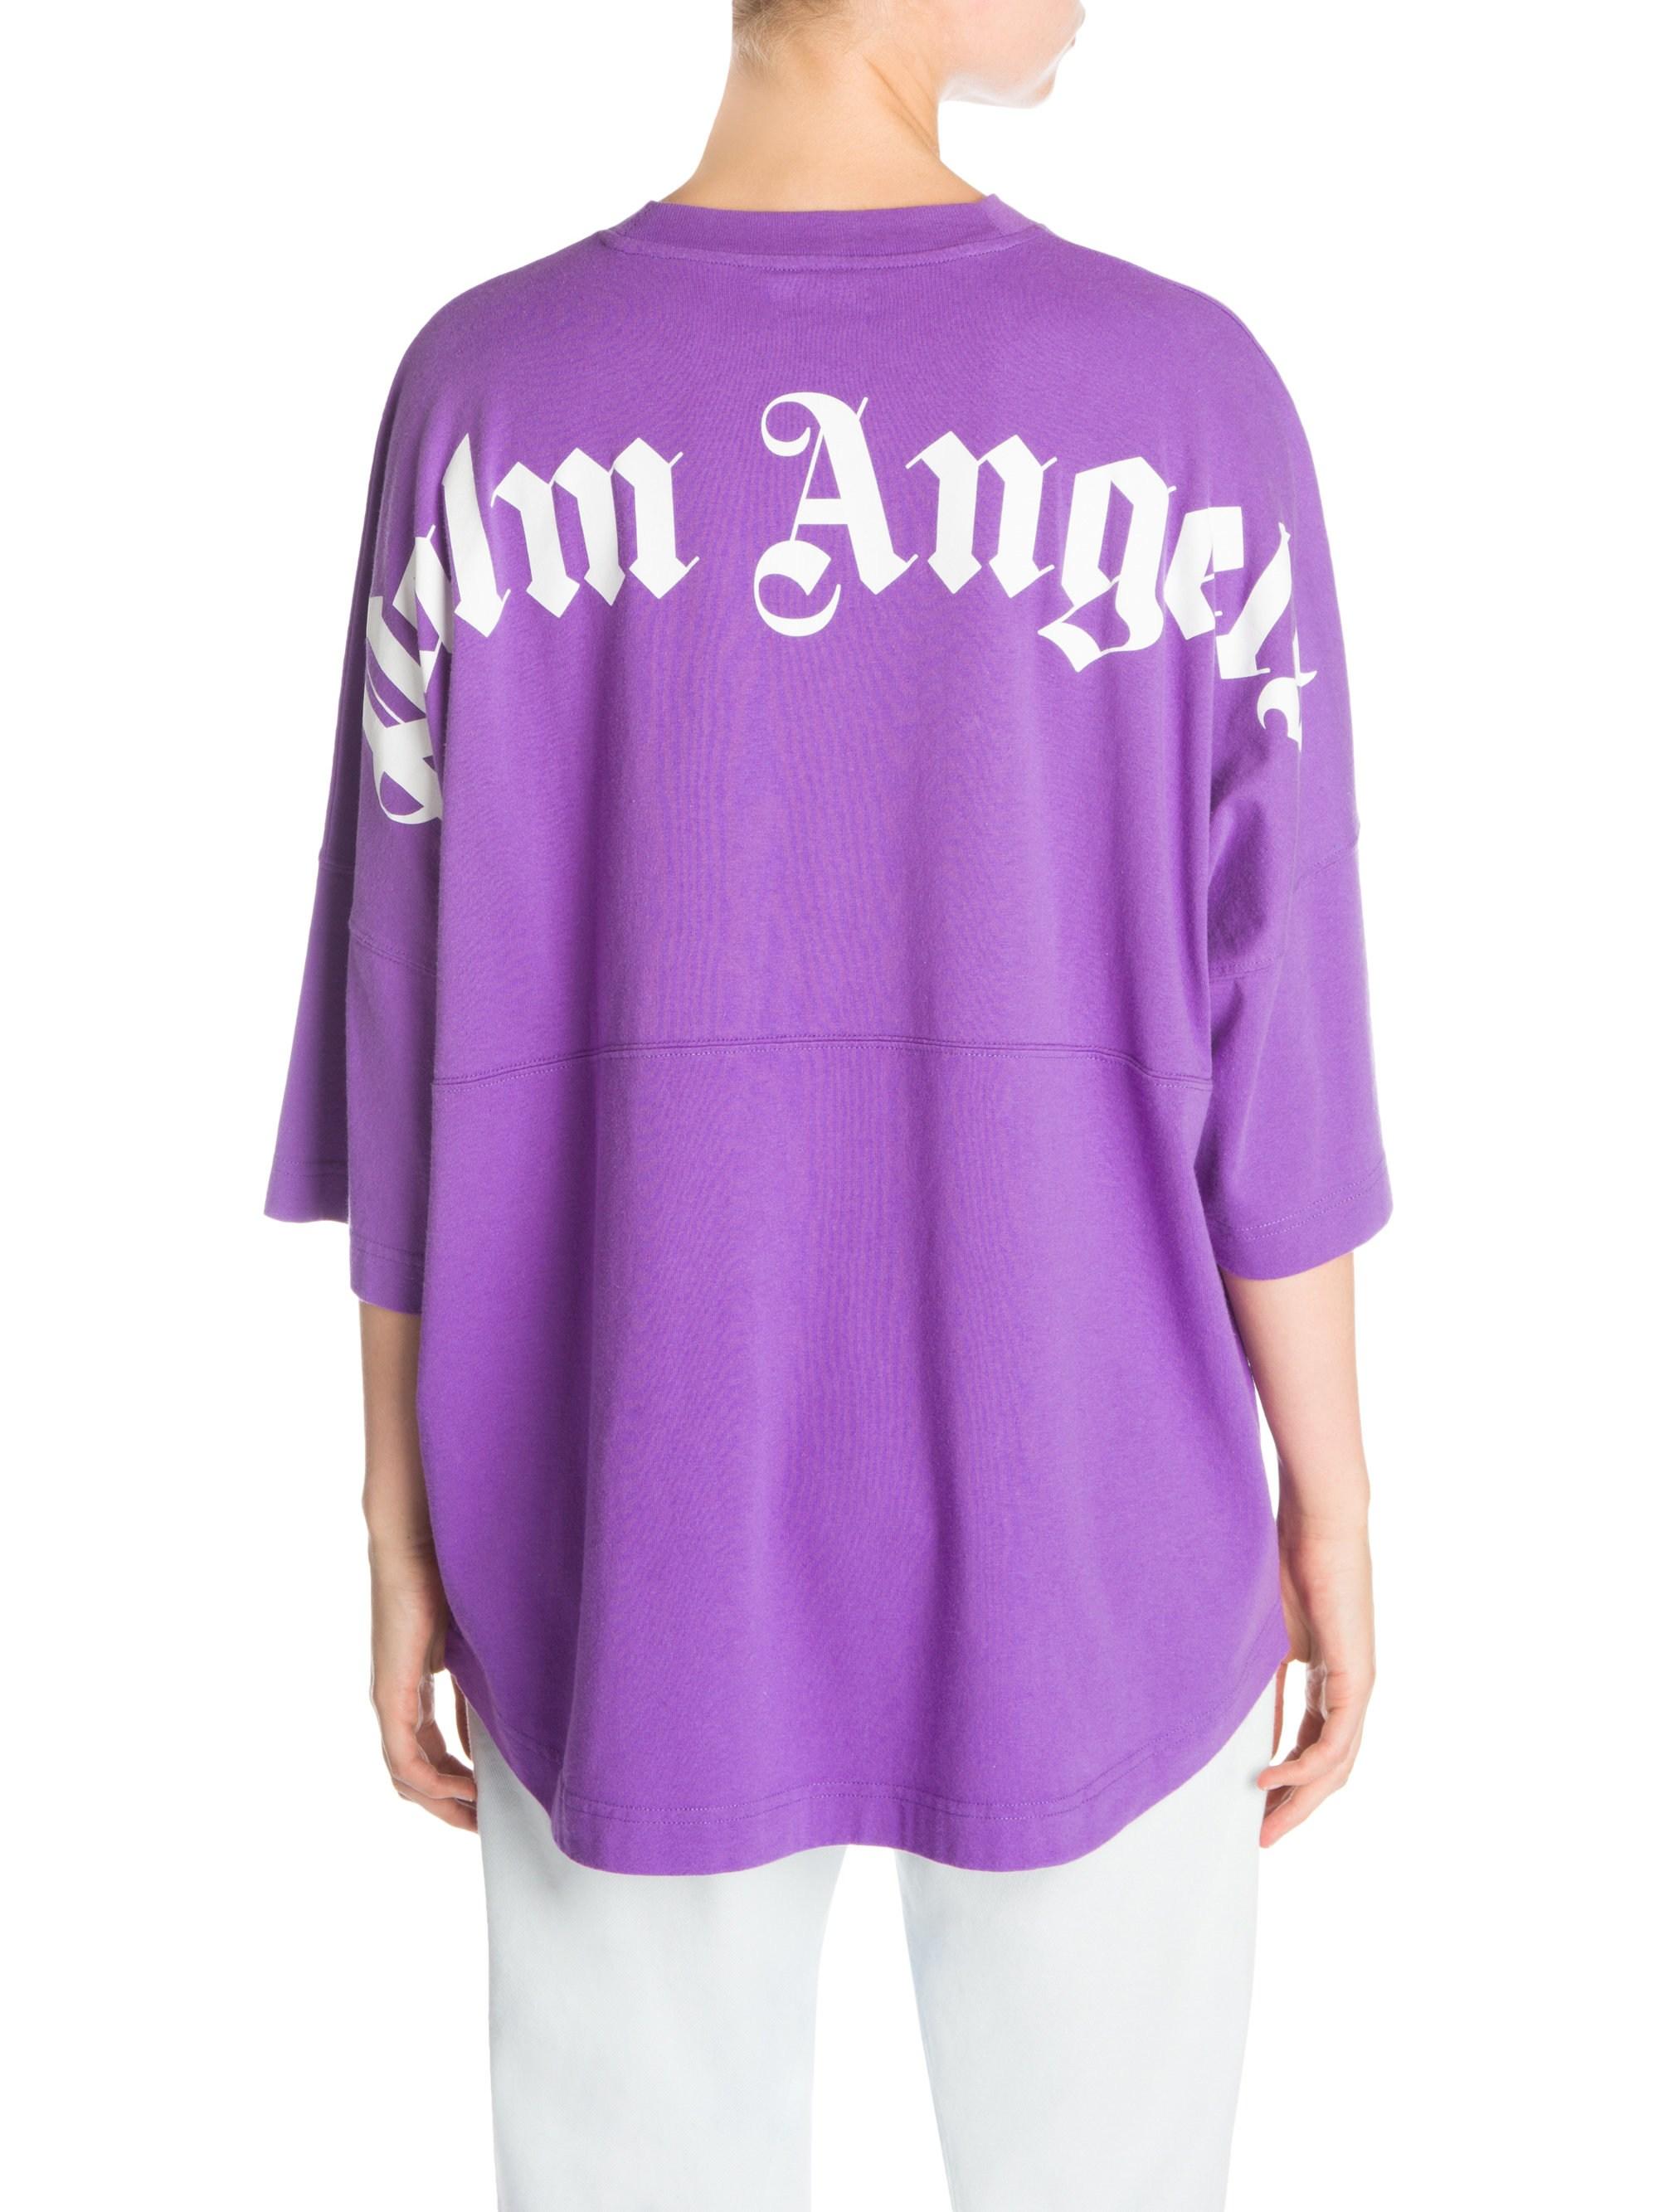 palm angels purple shirt